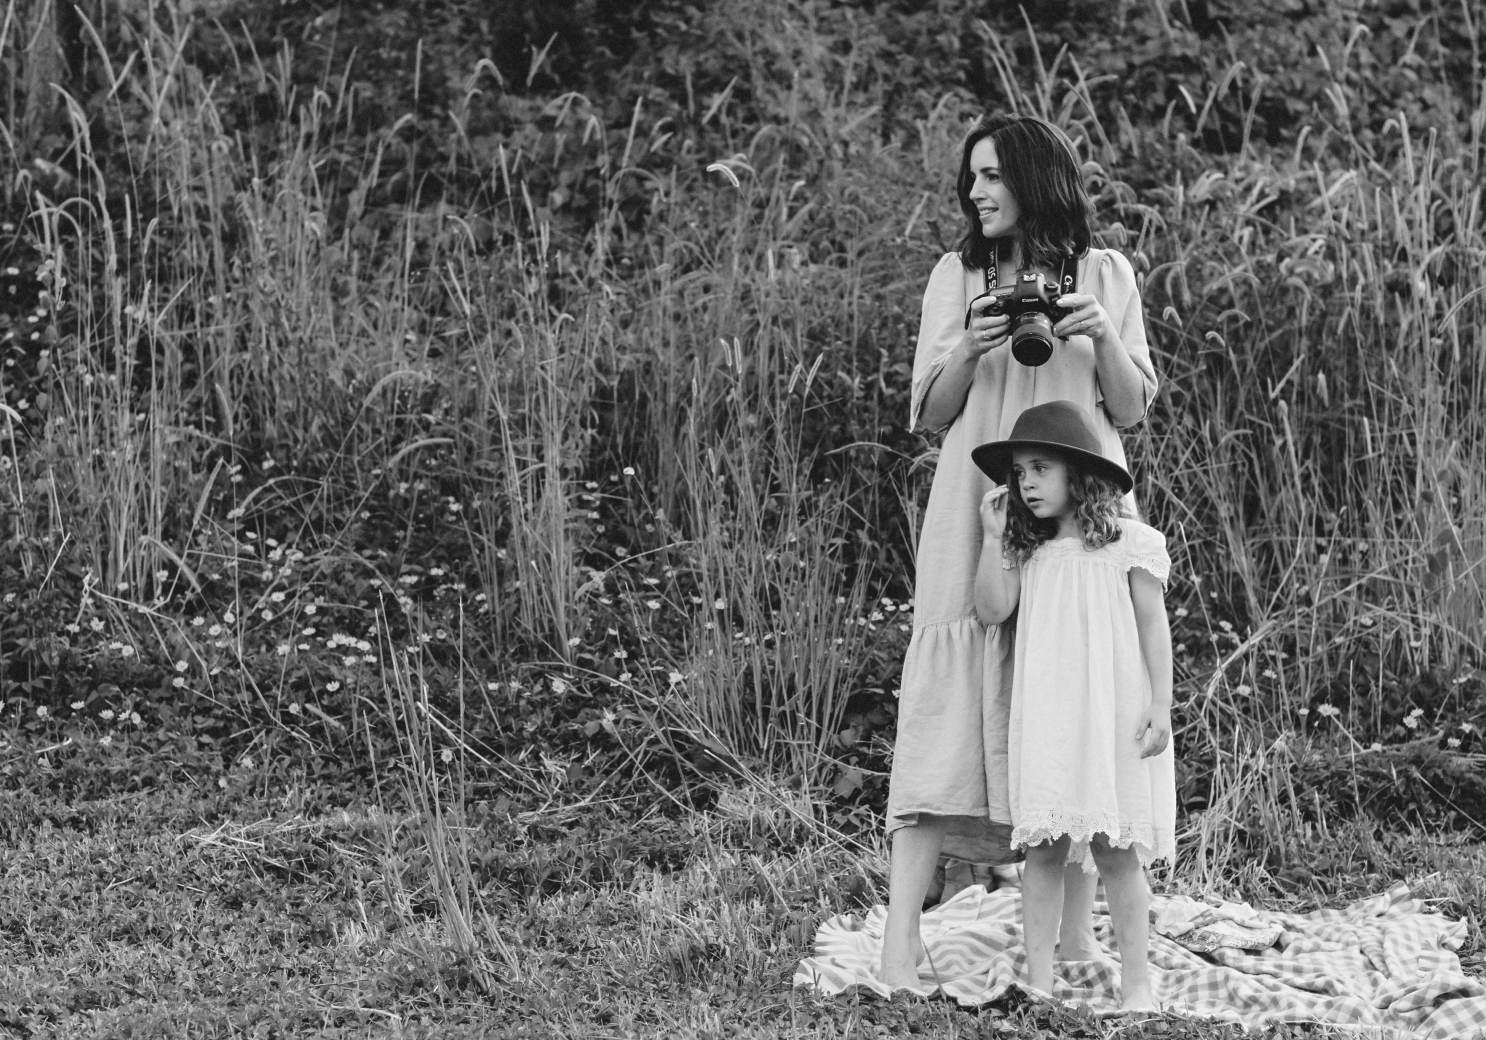 Photographer Bridget Wood on Capturing the Invisibility of Motherhood